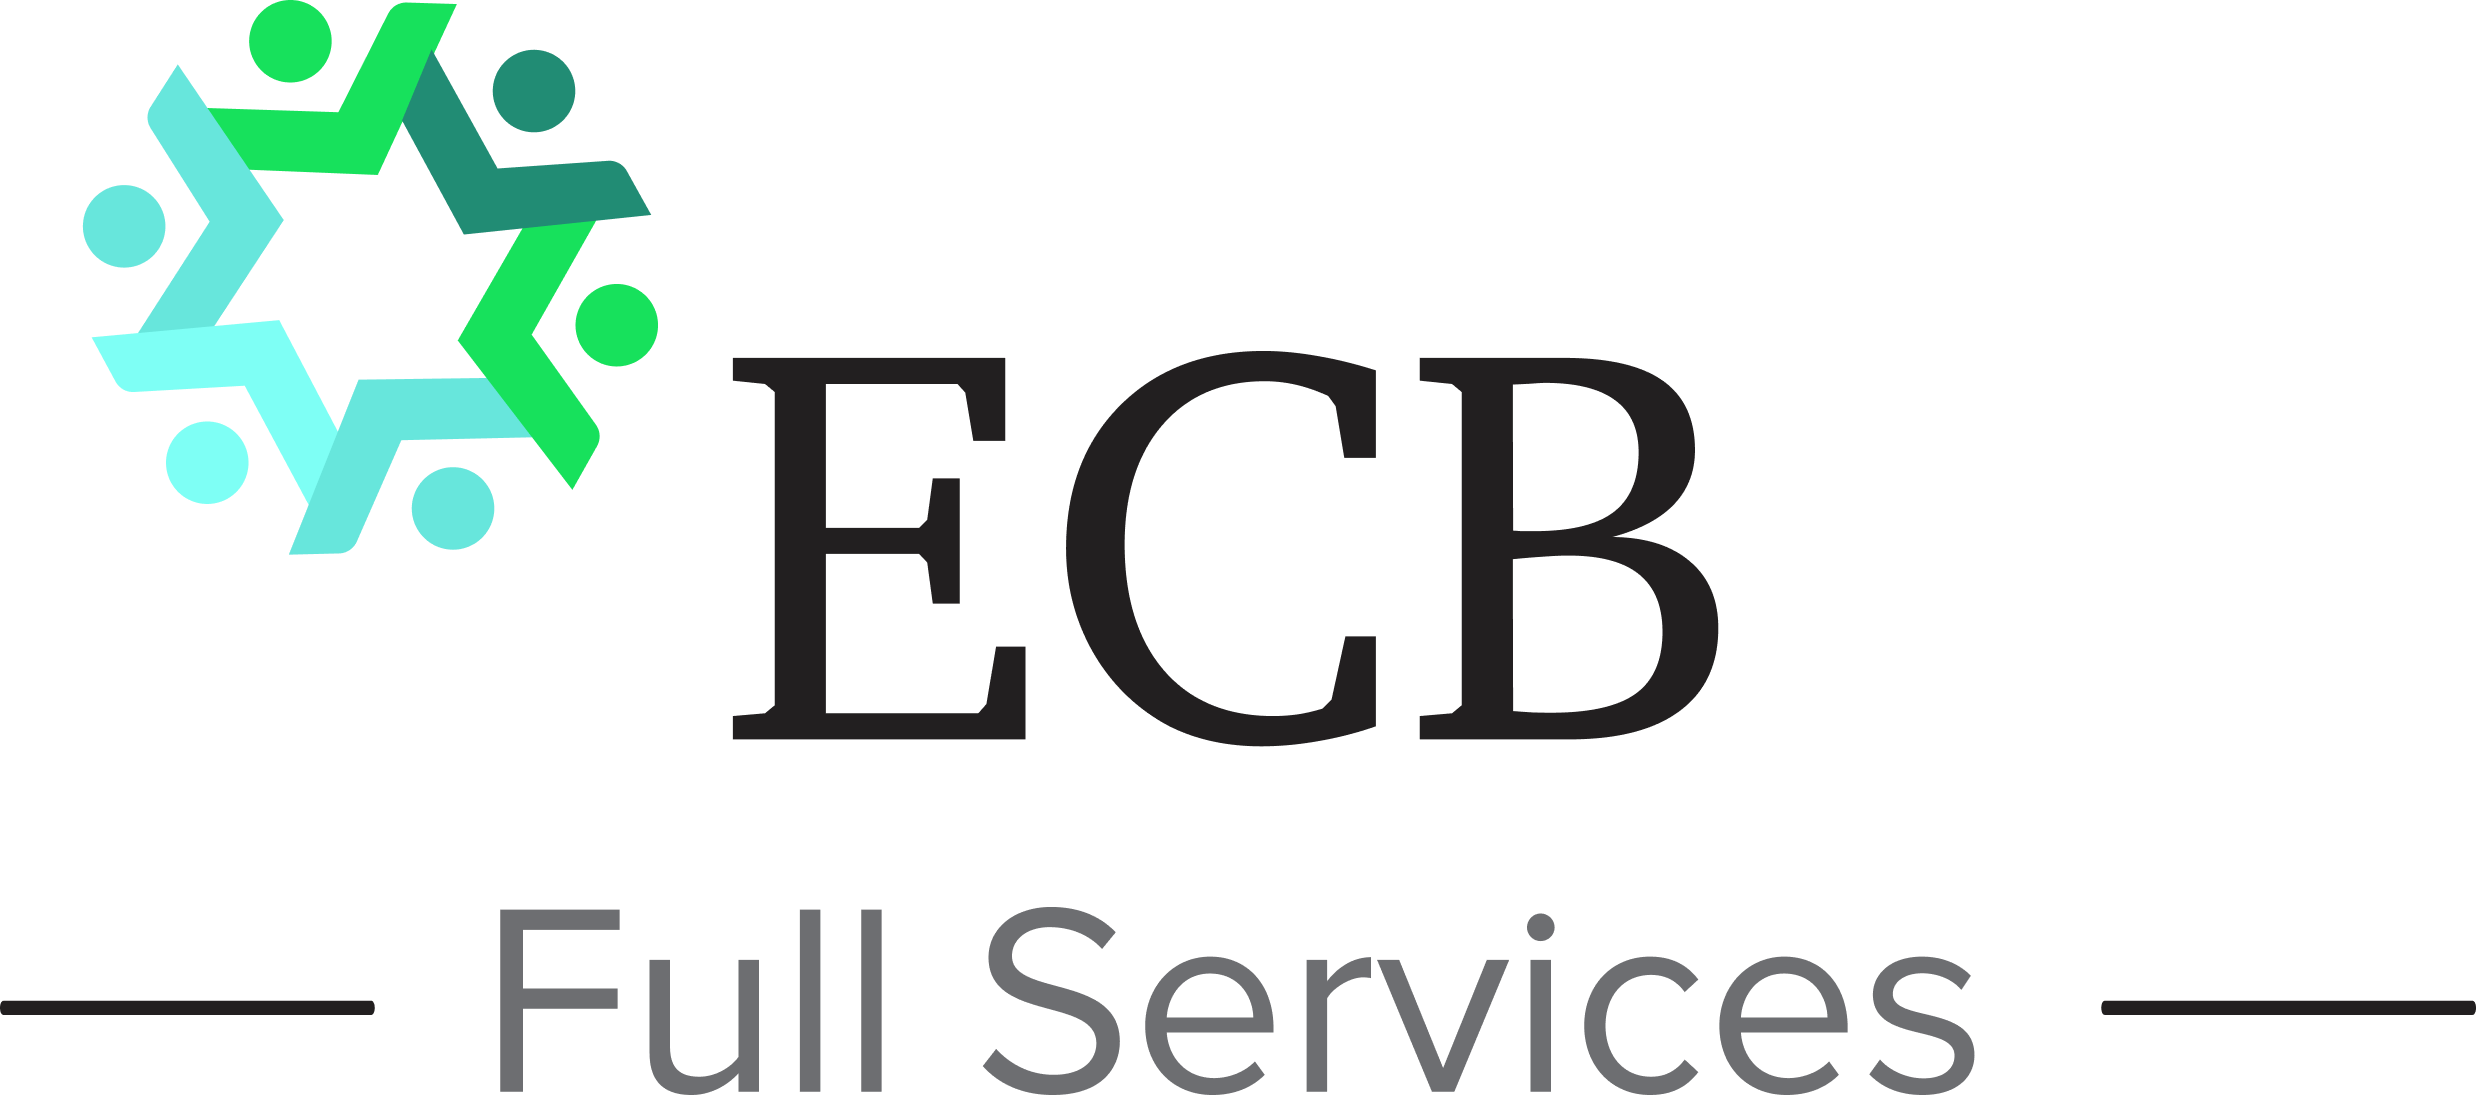 ECB Full Services